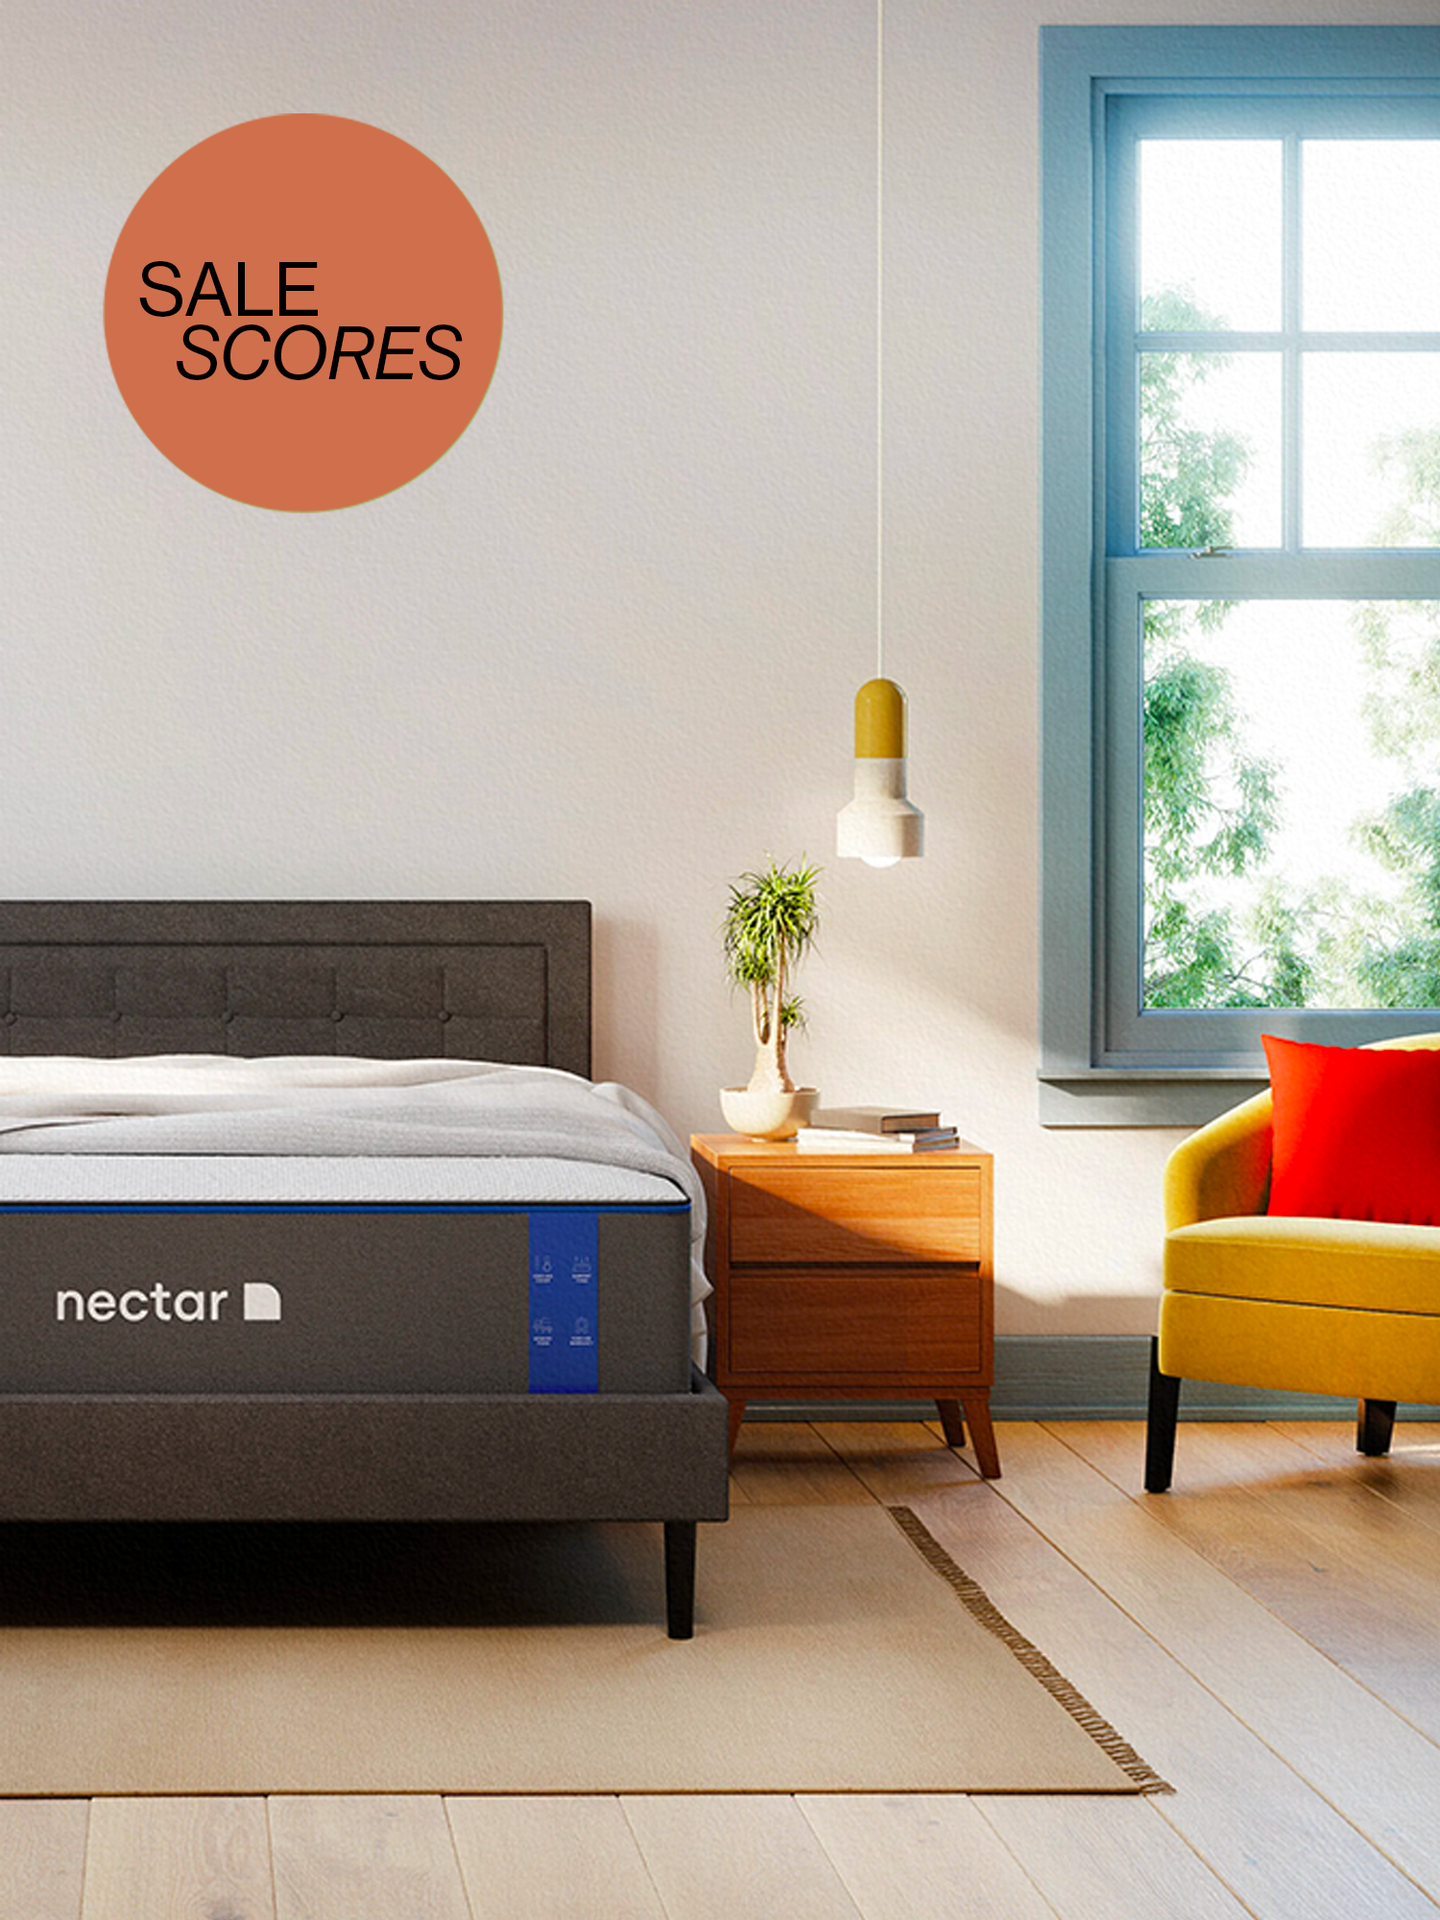 nectar mattress sale